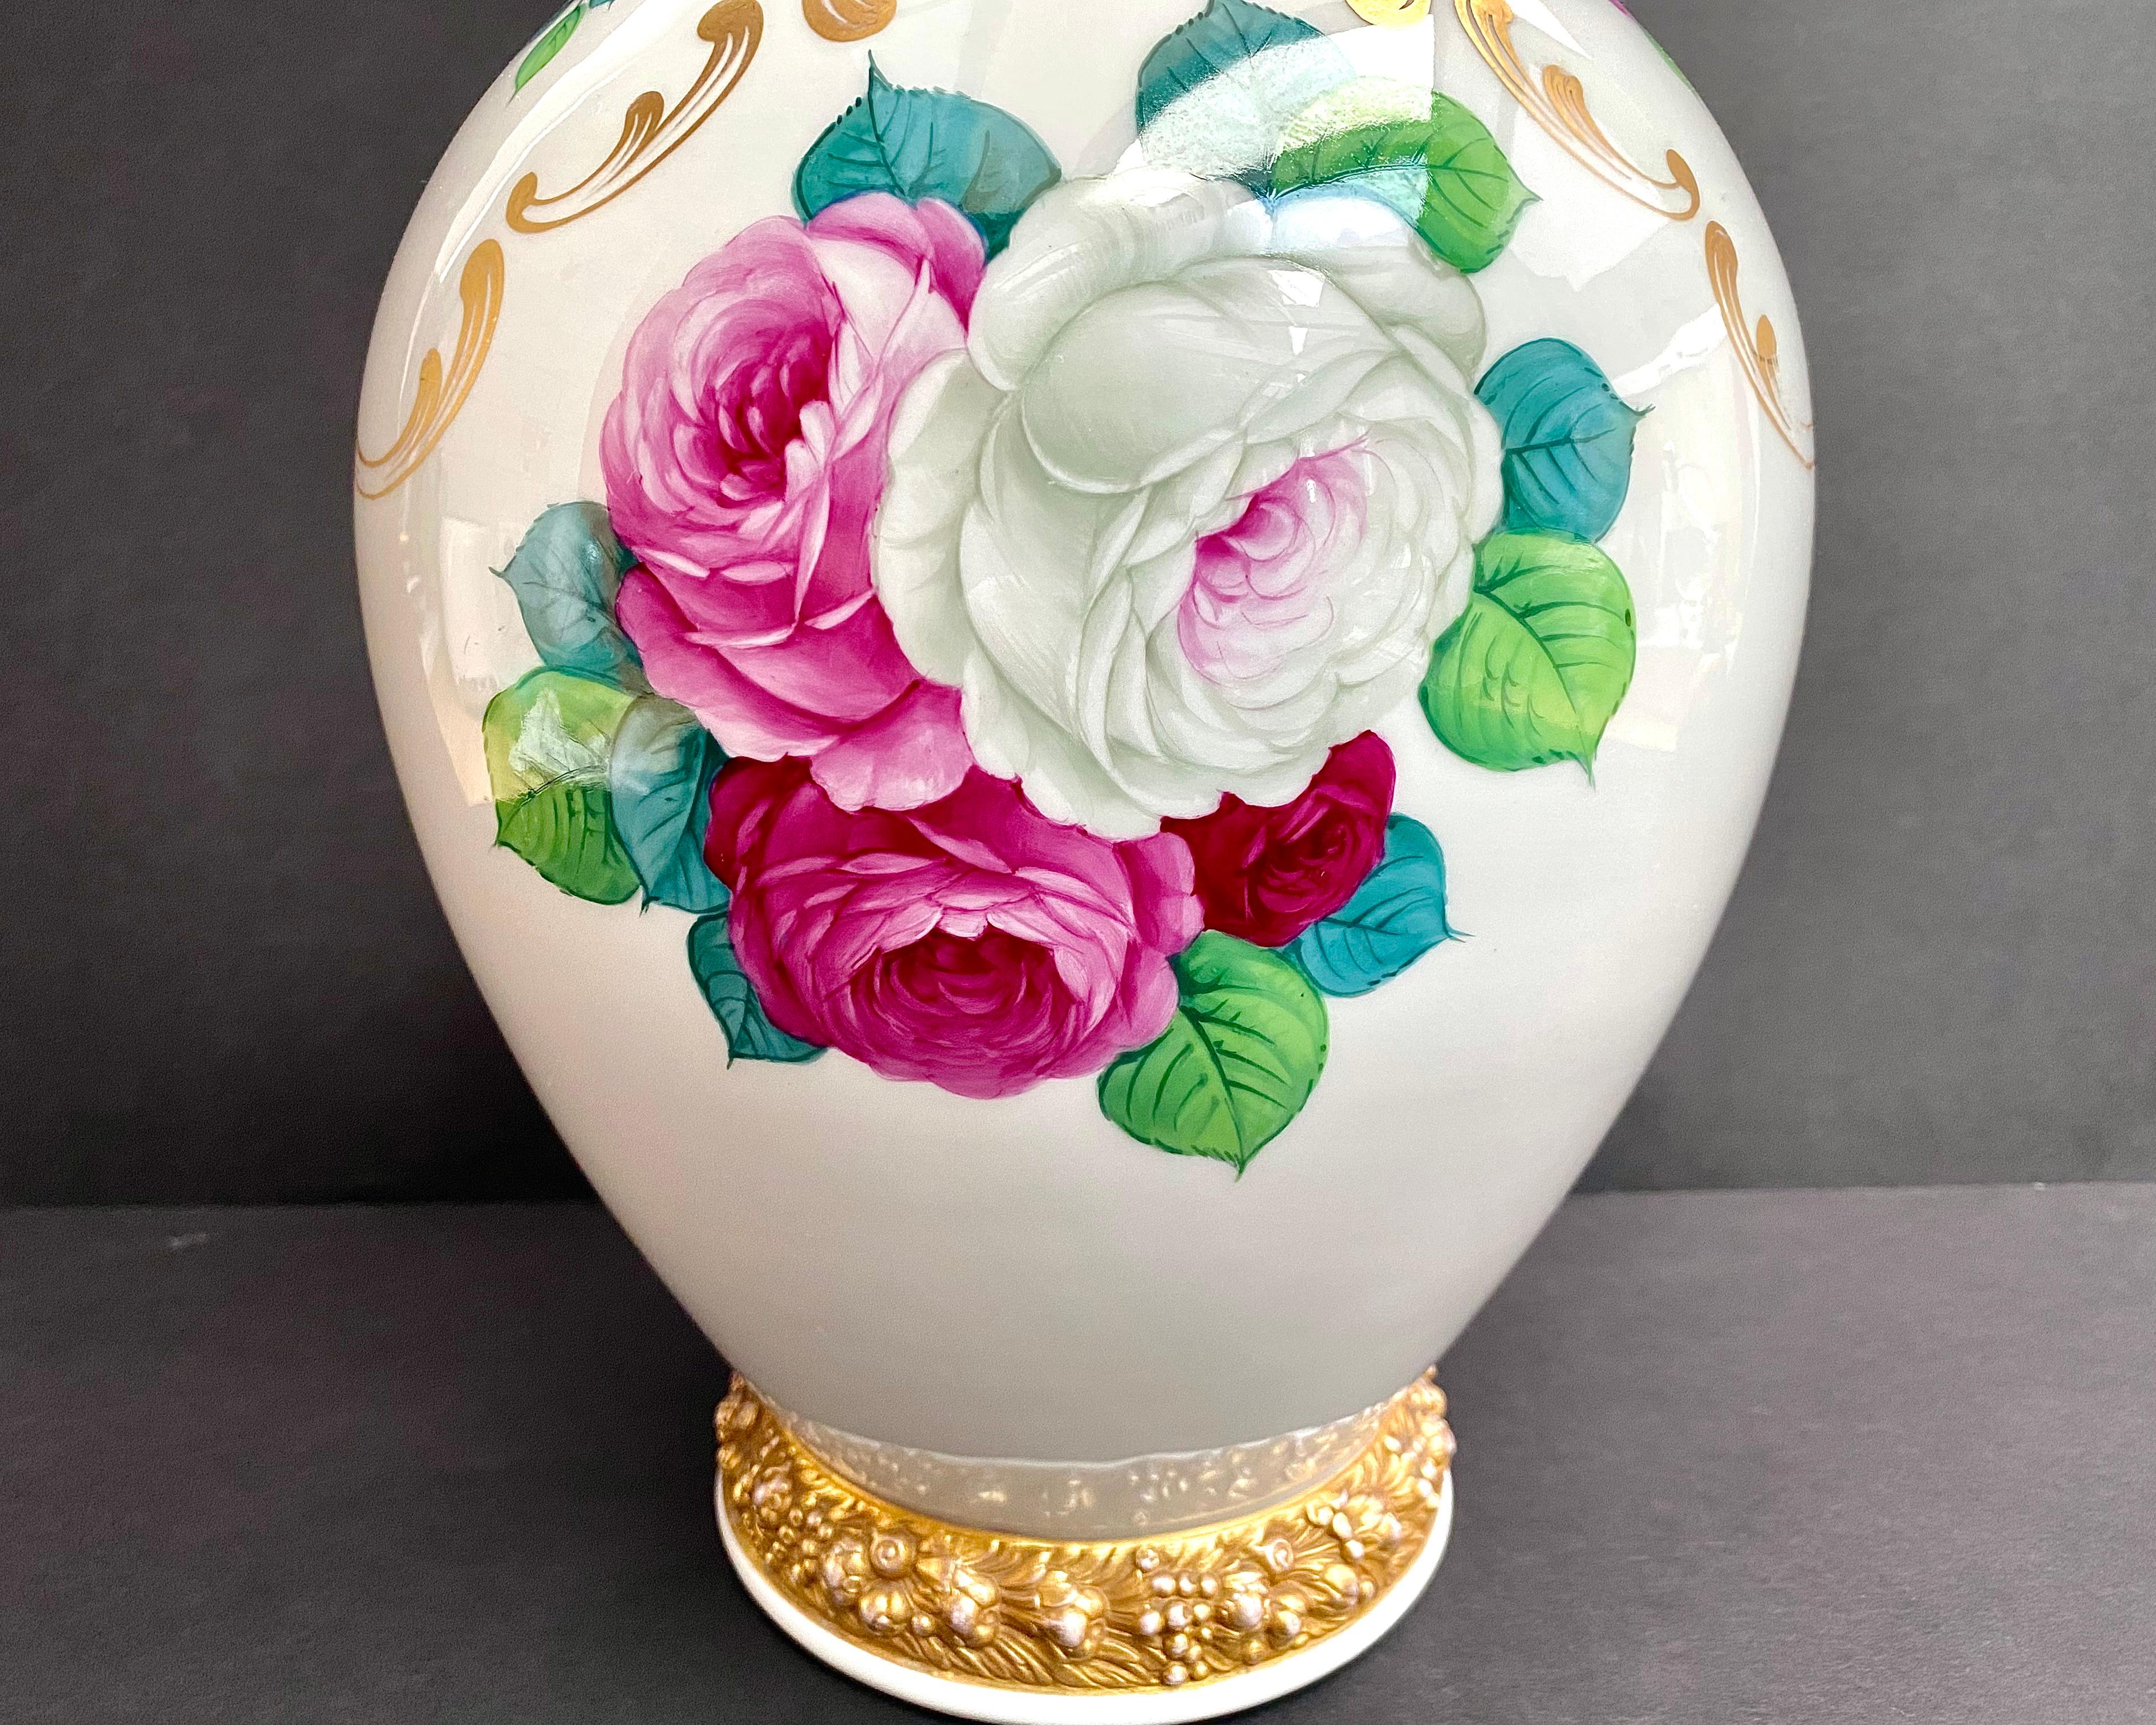 Antique Rosenthal Vase Art Nouveau Roses Jardiniere Signed Floral Vase 1920s For Sale 3